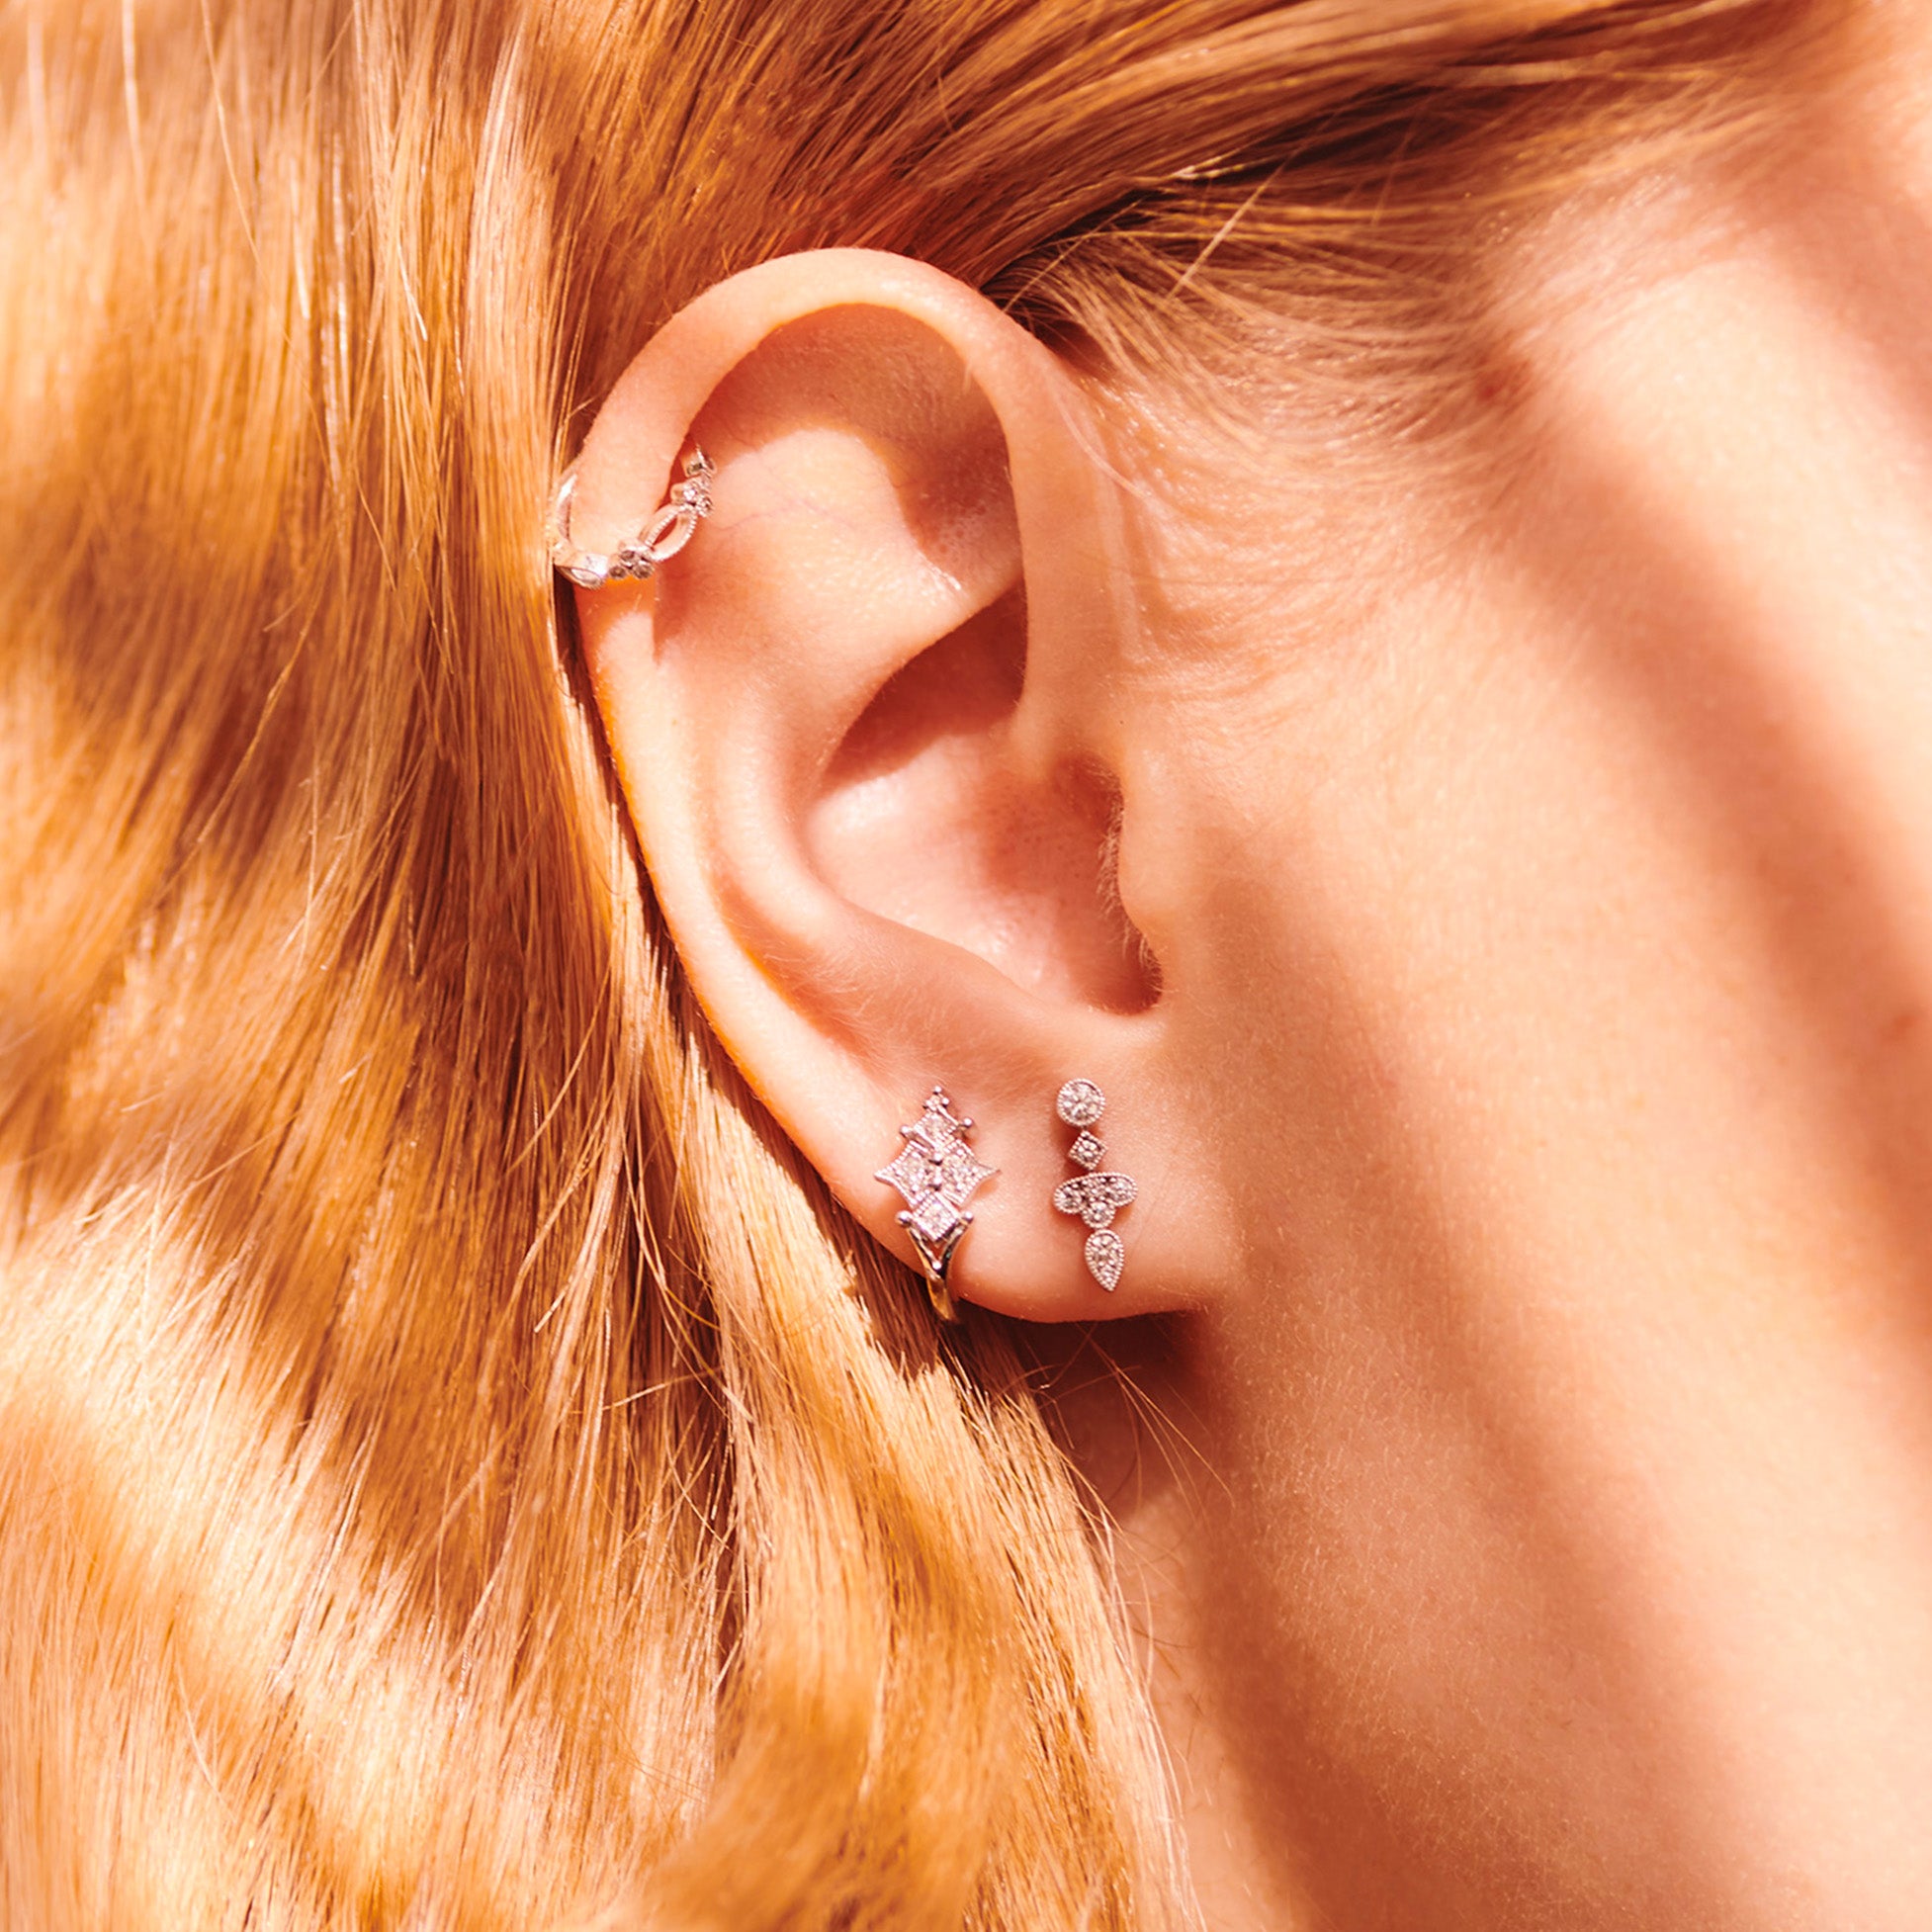 Single earring - Glitter tiny hoop